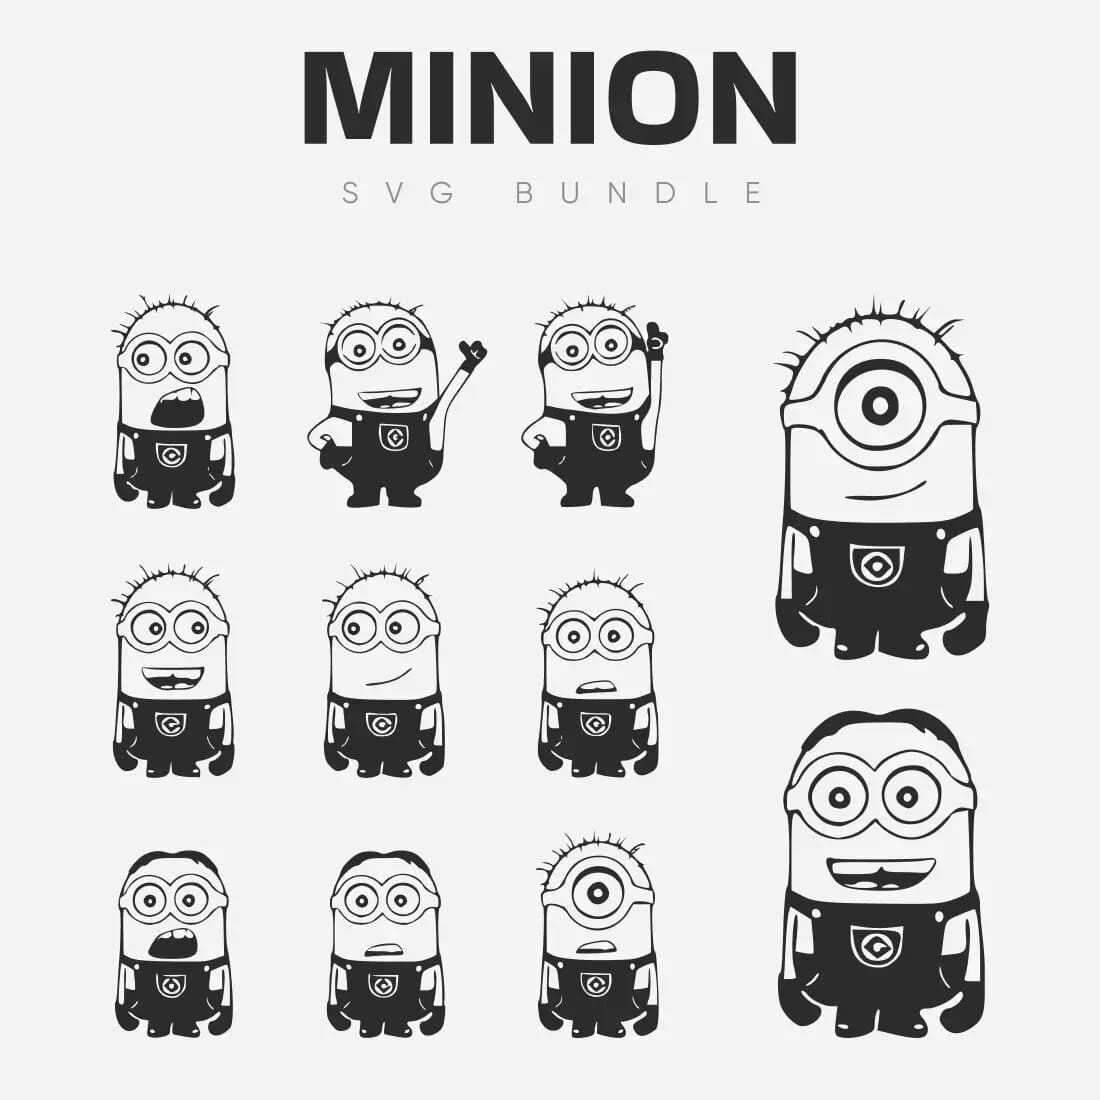 Minion SVG Bundle Preview 10.